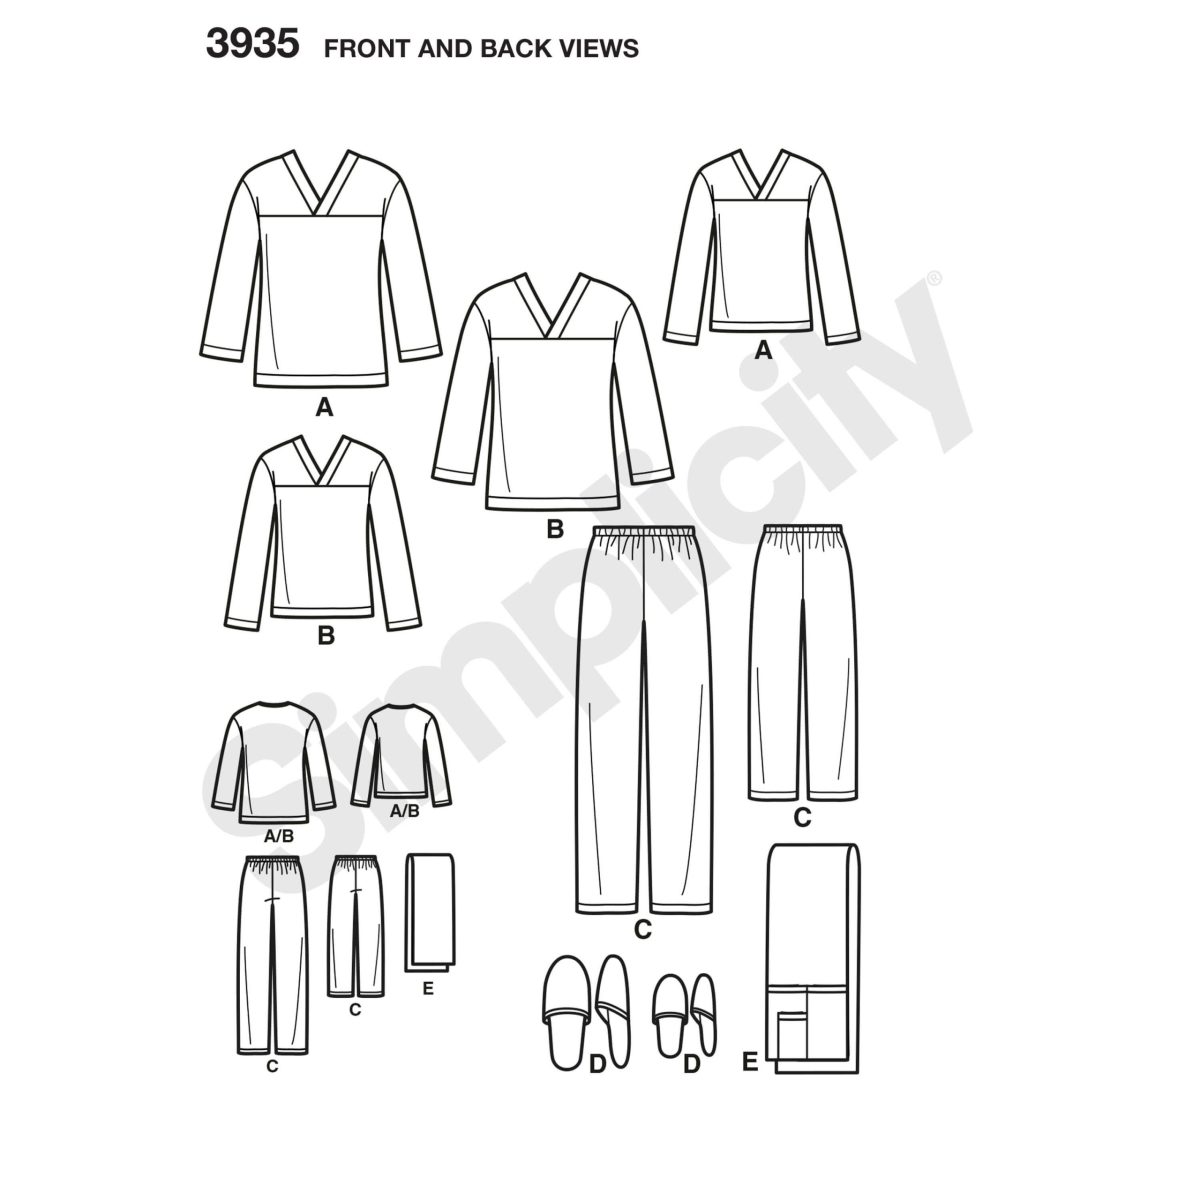 Simplicity Sewing Pattern 3935 Child, Teen & Adult Sleepwear